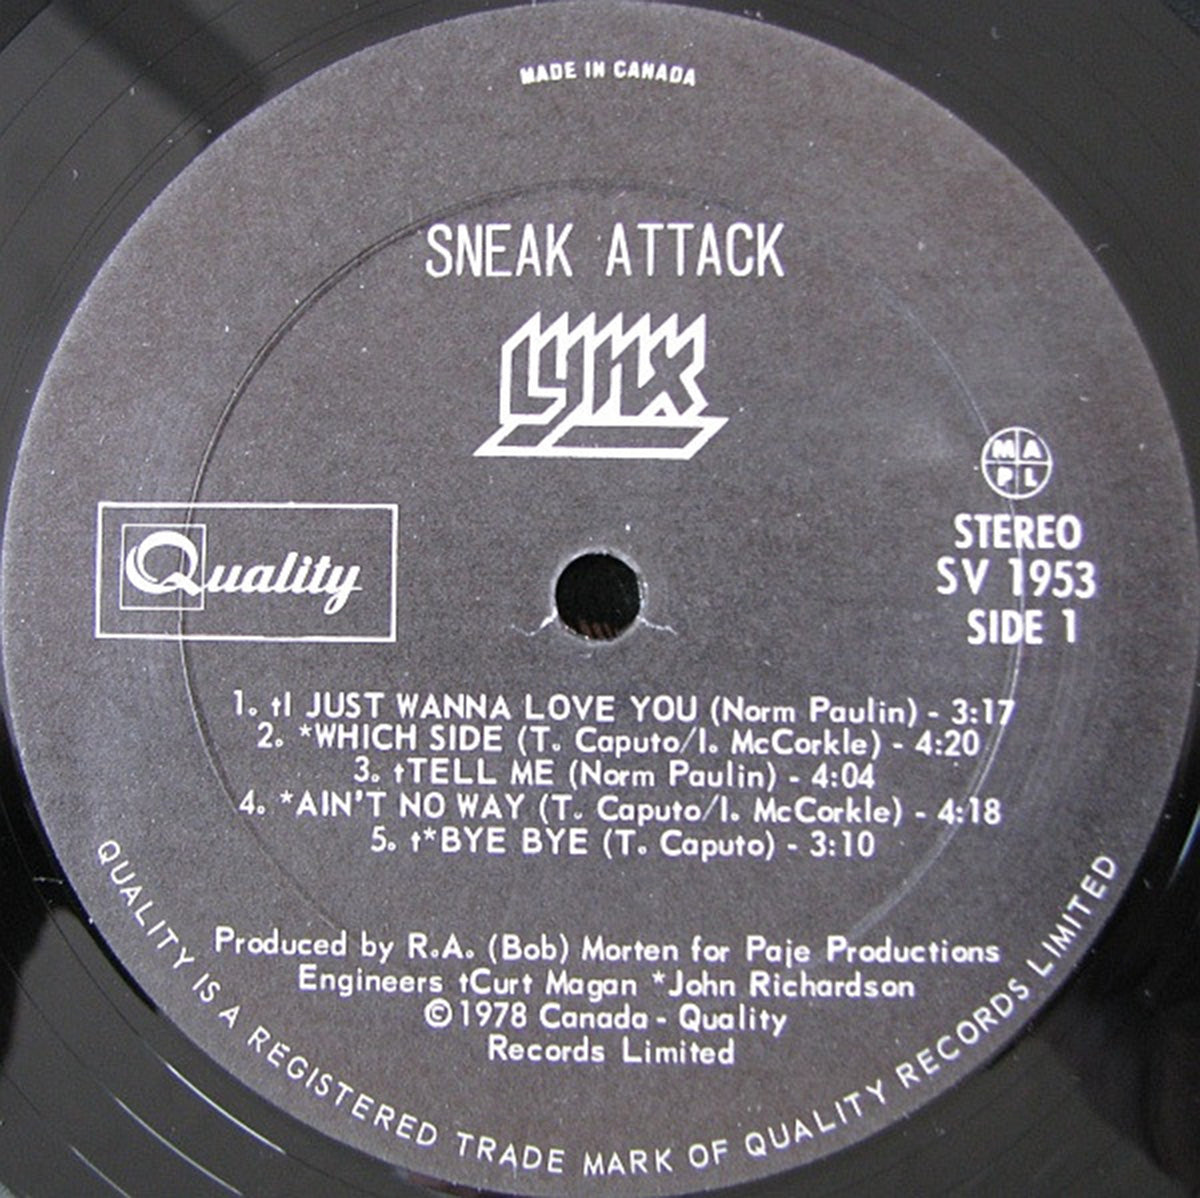 Lynx – Sneak Attack - 1978